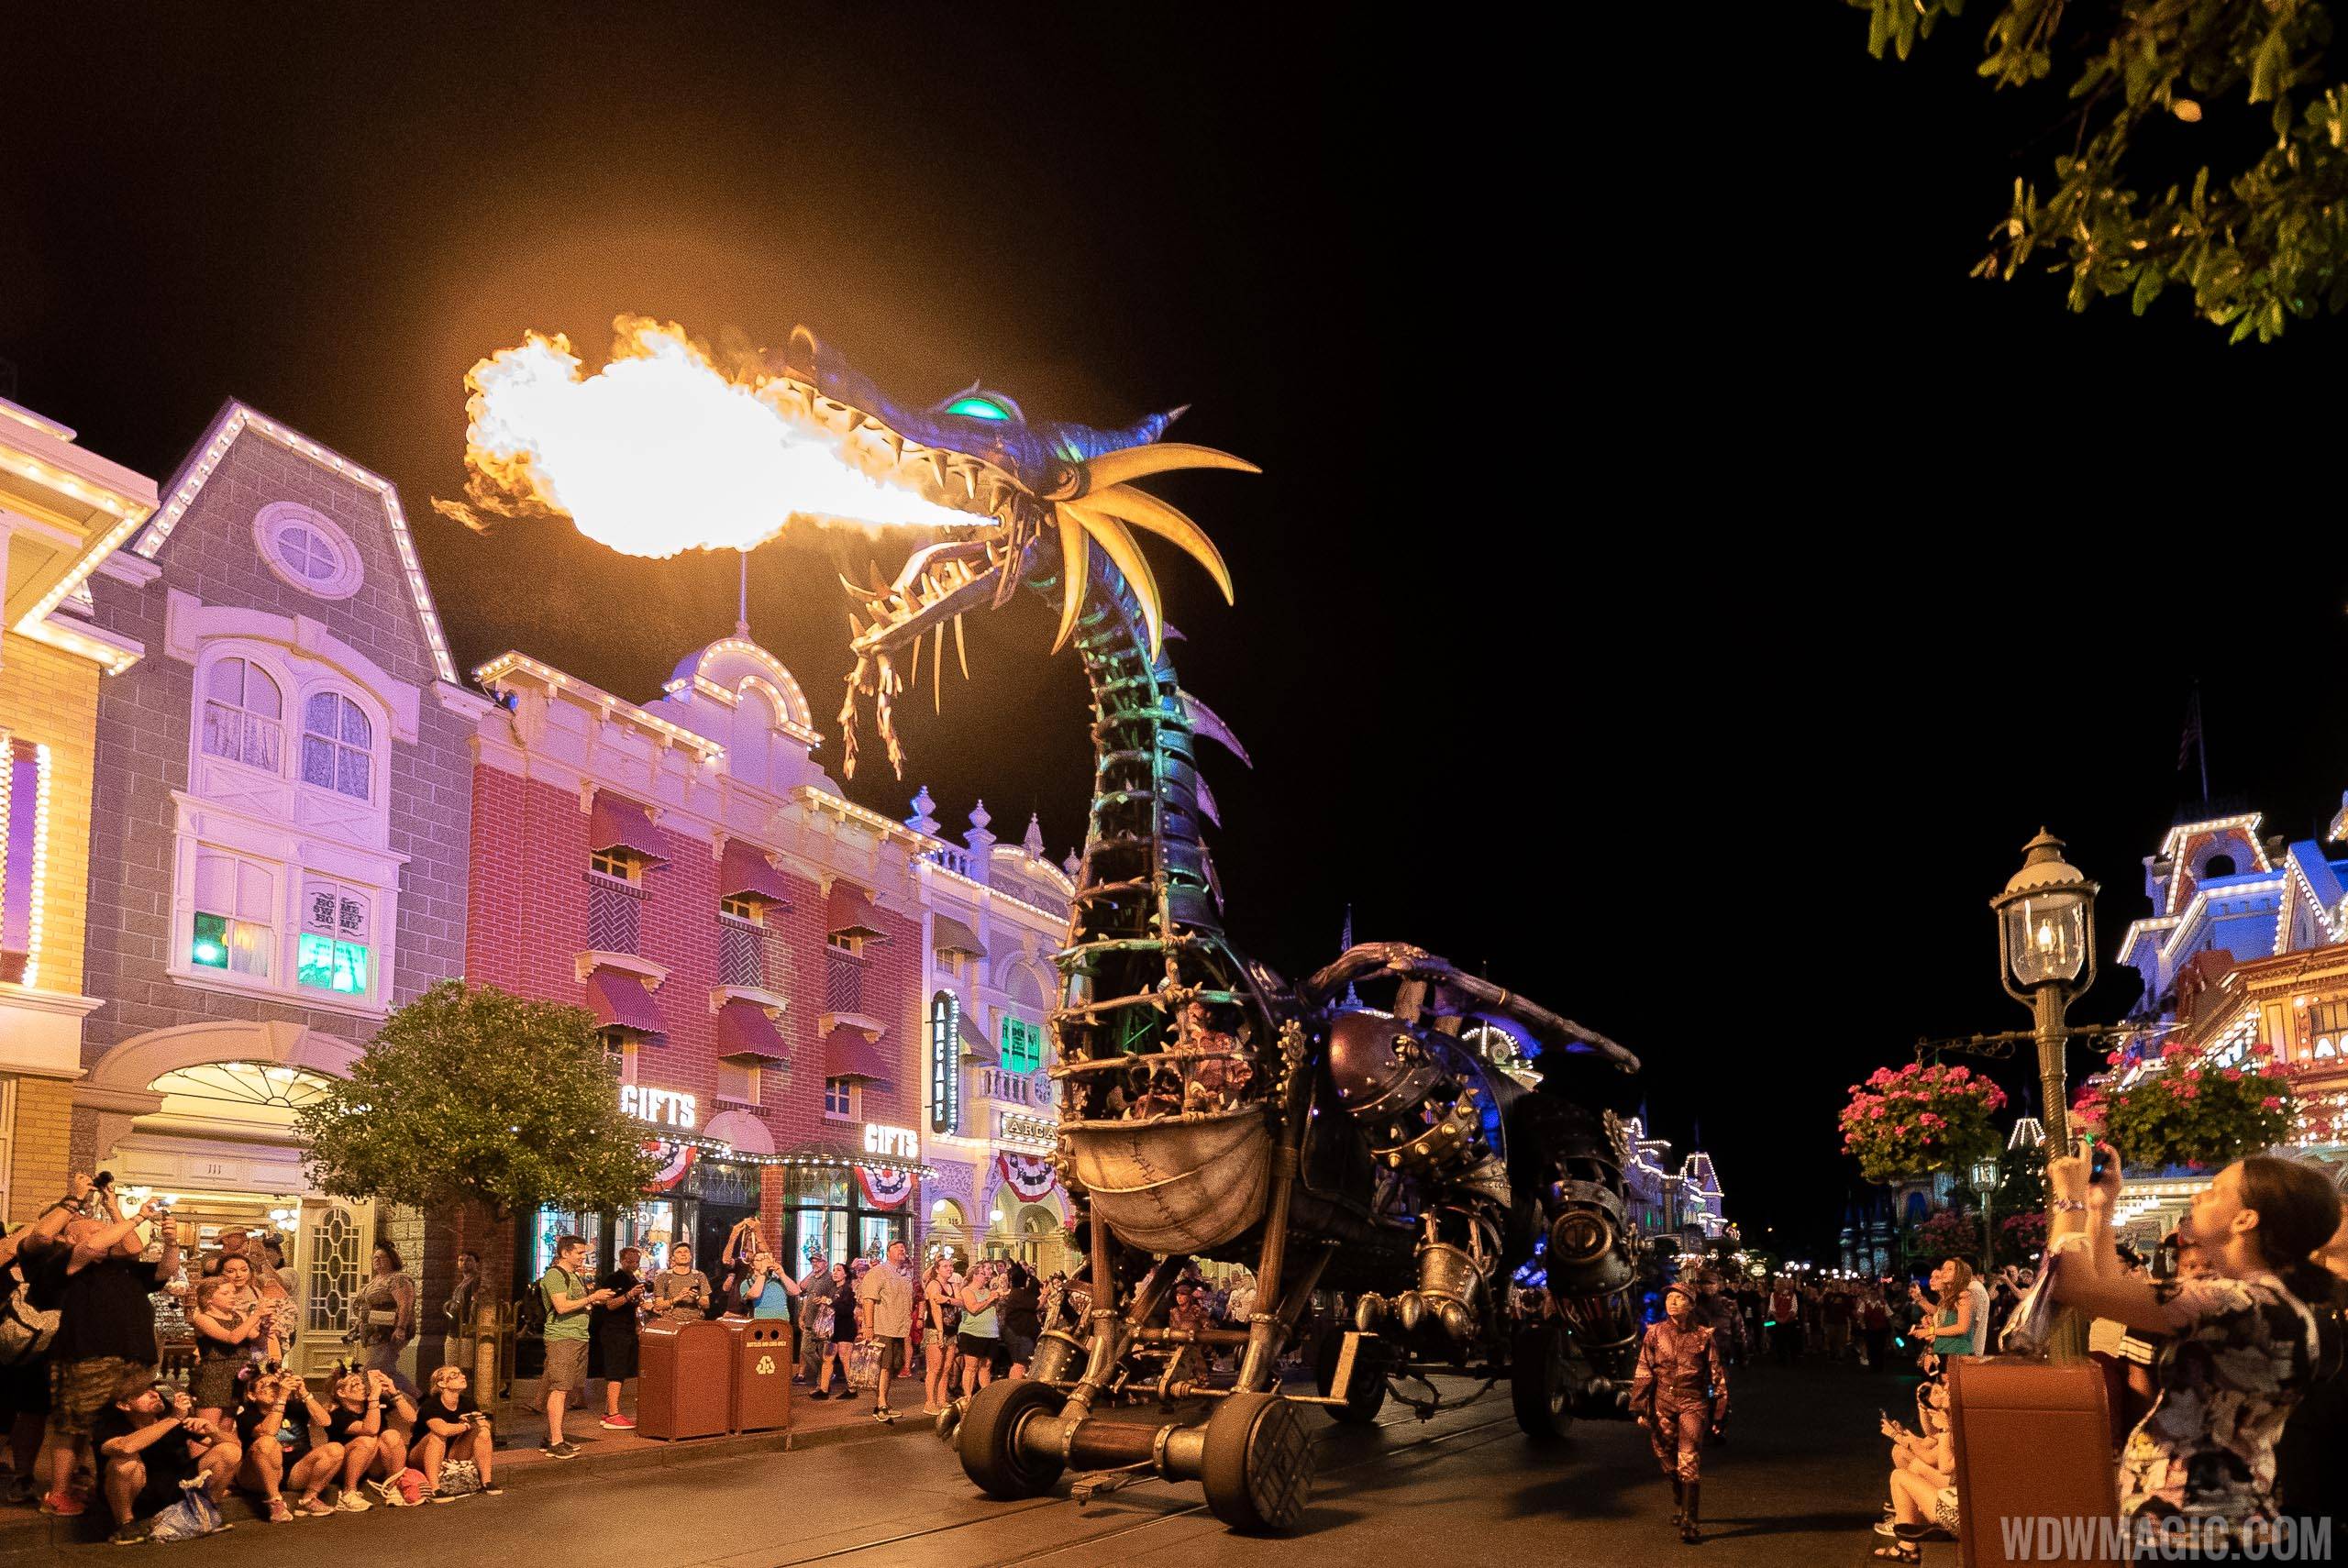 Maleficent Returns to Disney's Festival of Fantasy Parade at the Magic Kingdom